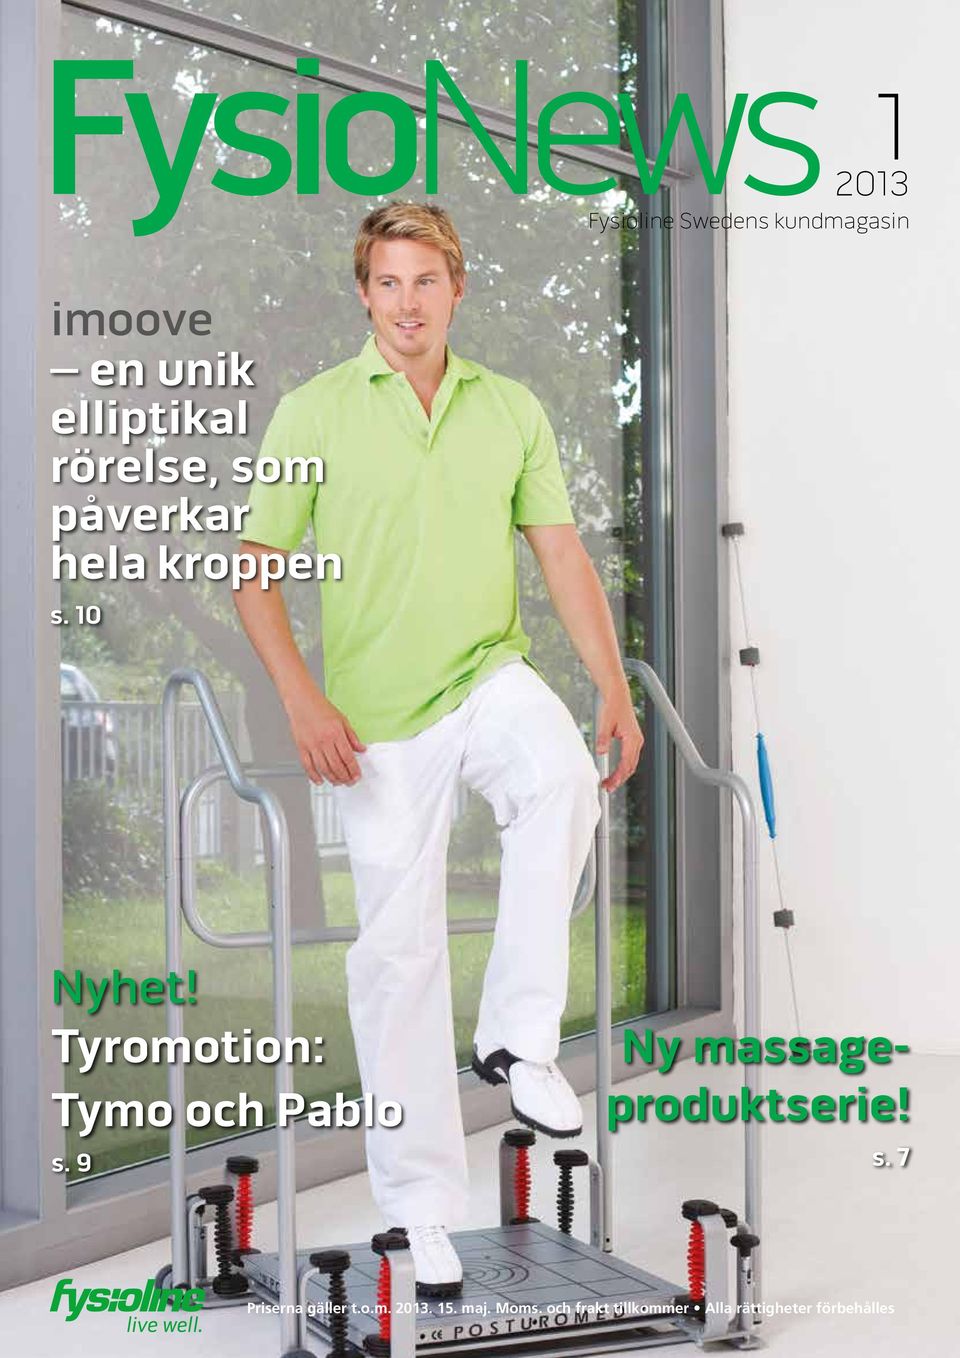 Tyromotion: Tymo och Pablo s. 9 Ny massageproduktserie! s. 7 Priserna gäller t.